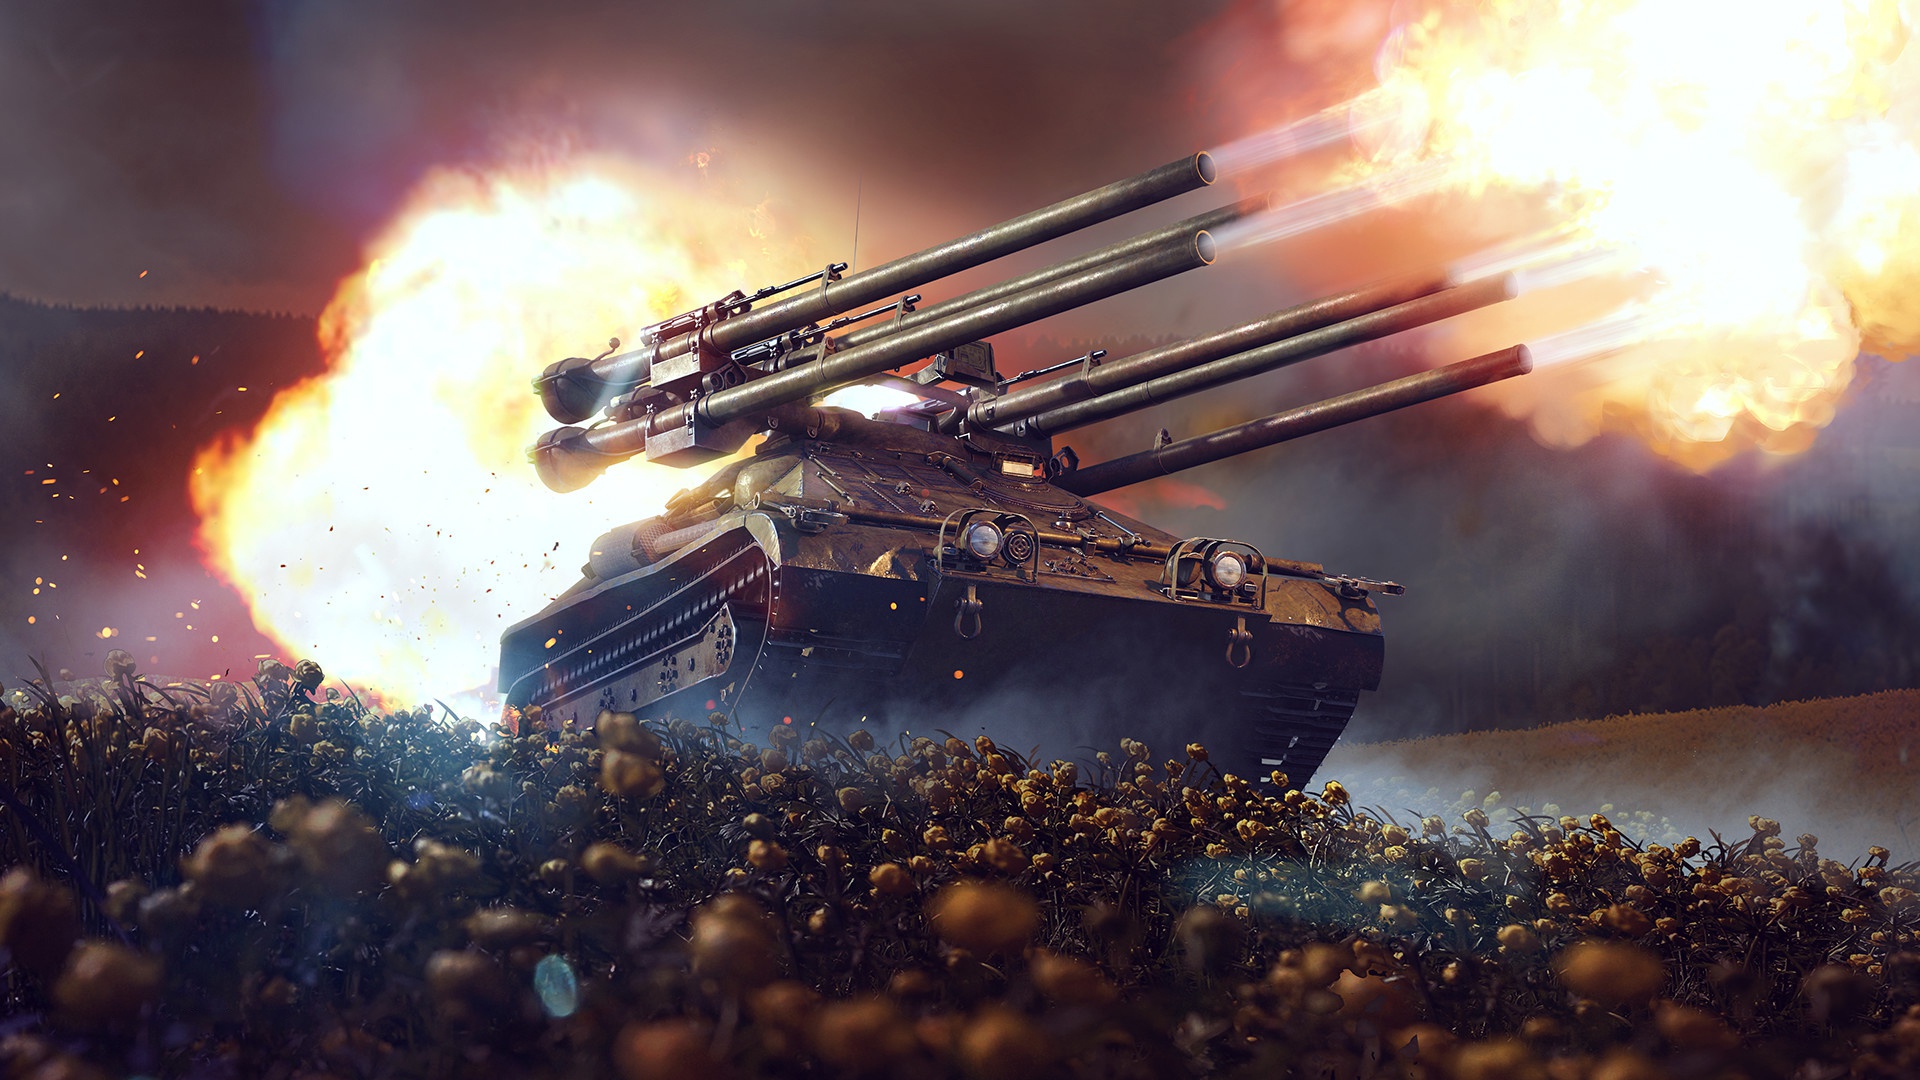 General 1920x1080 video games video game art digital art rocket launchers tank fire war flowers War Thunder military military vehicle M50 Ontos